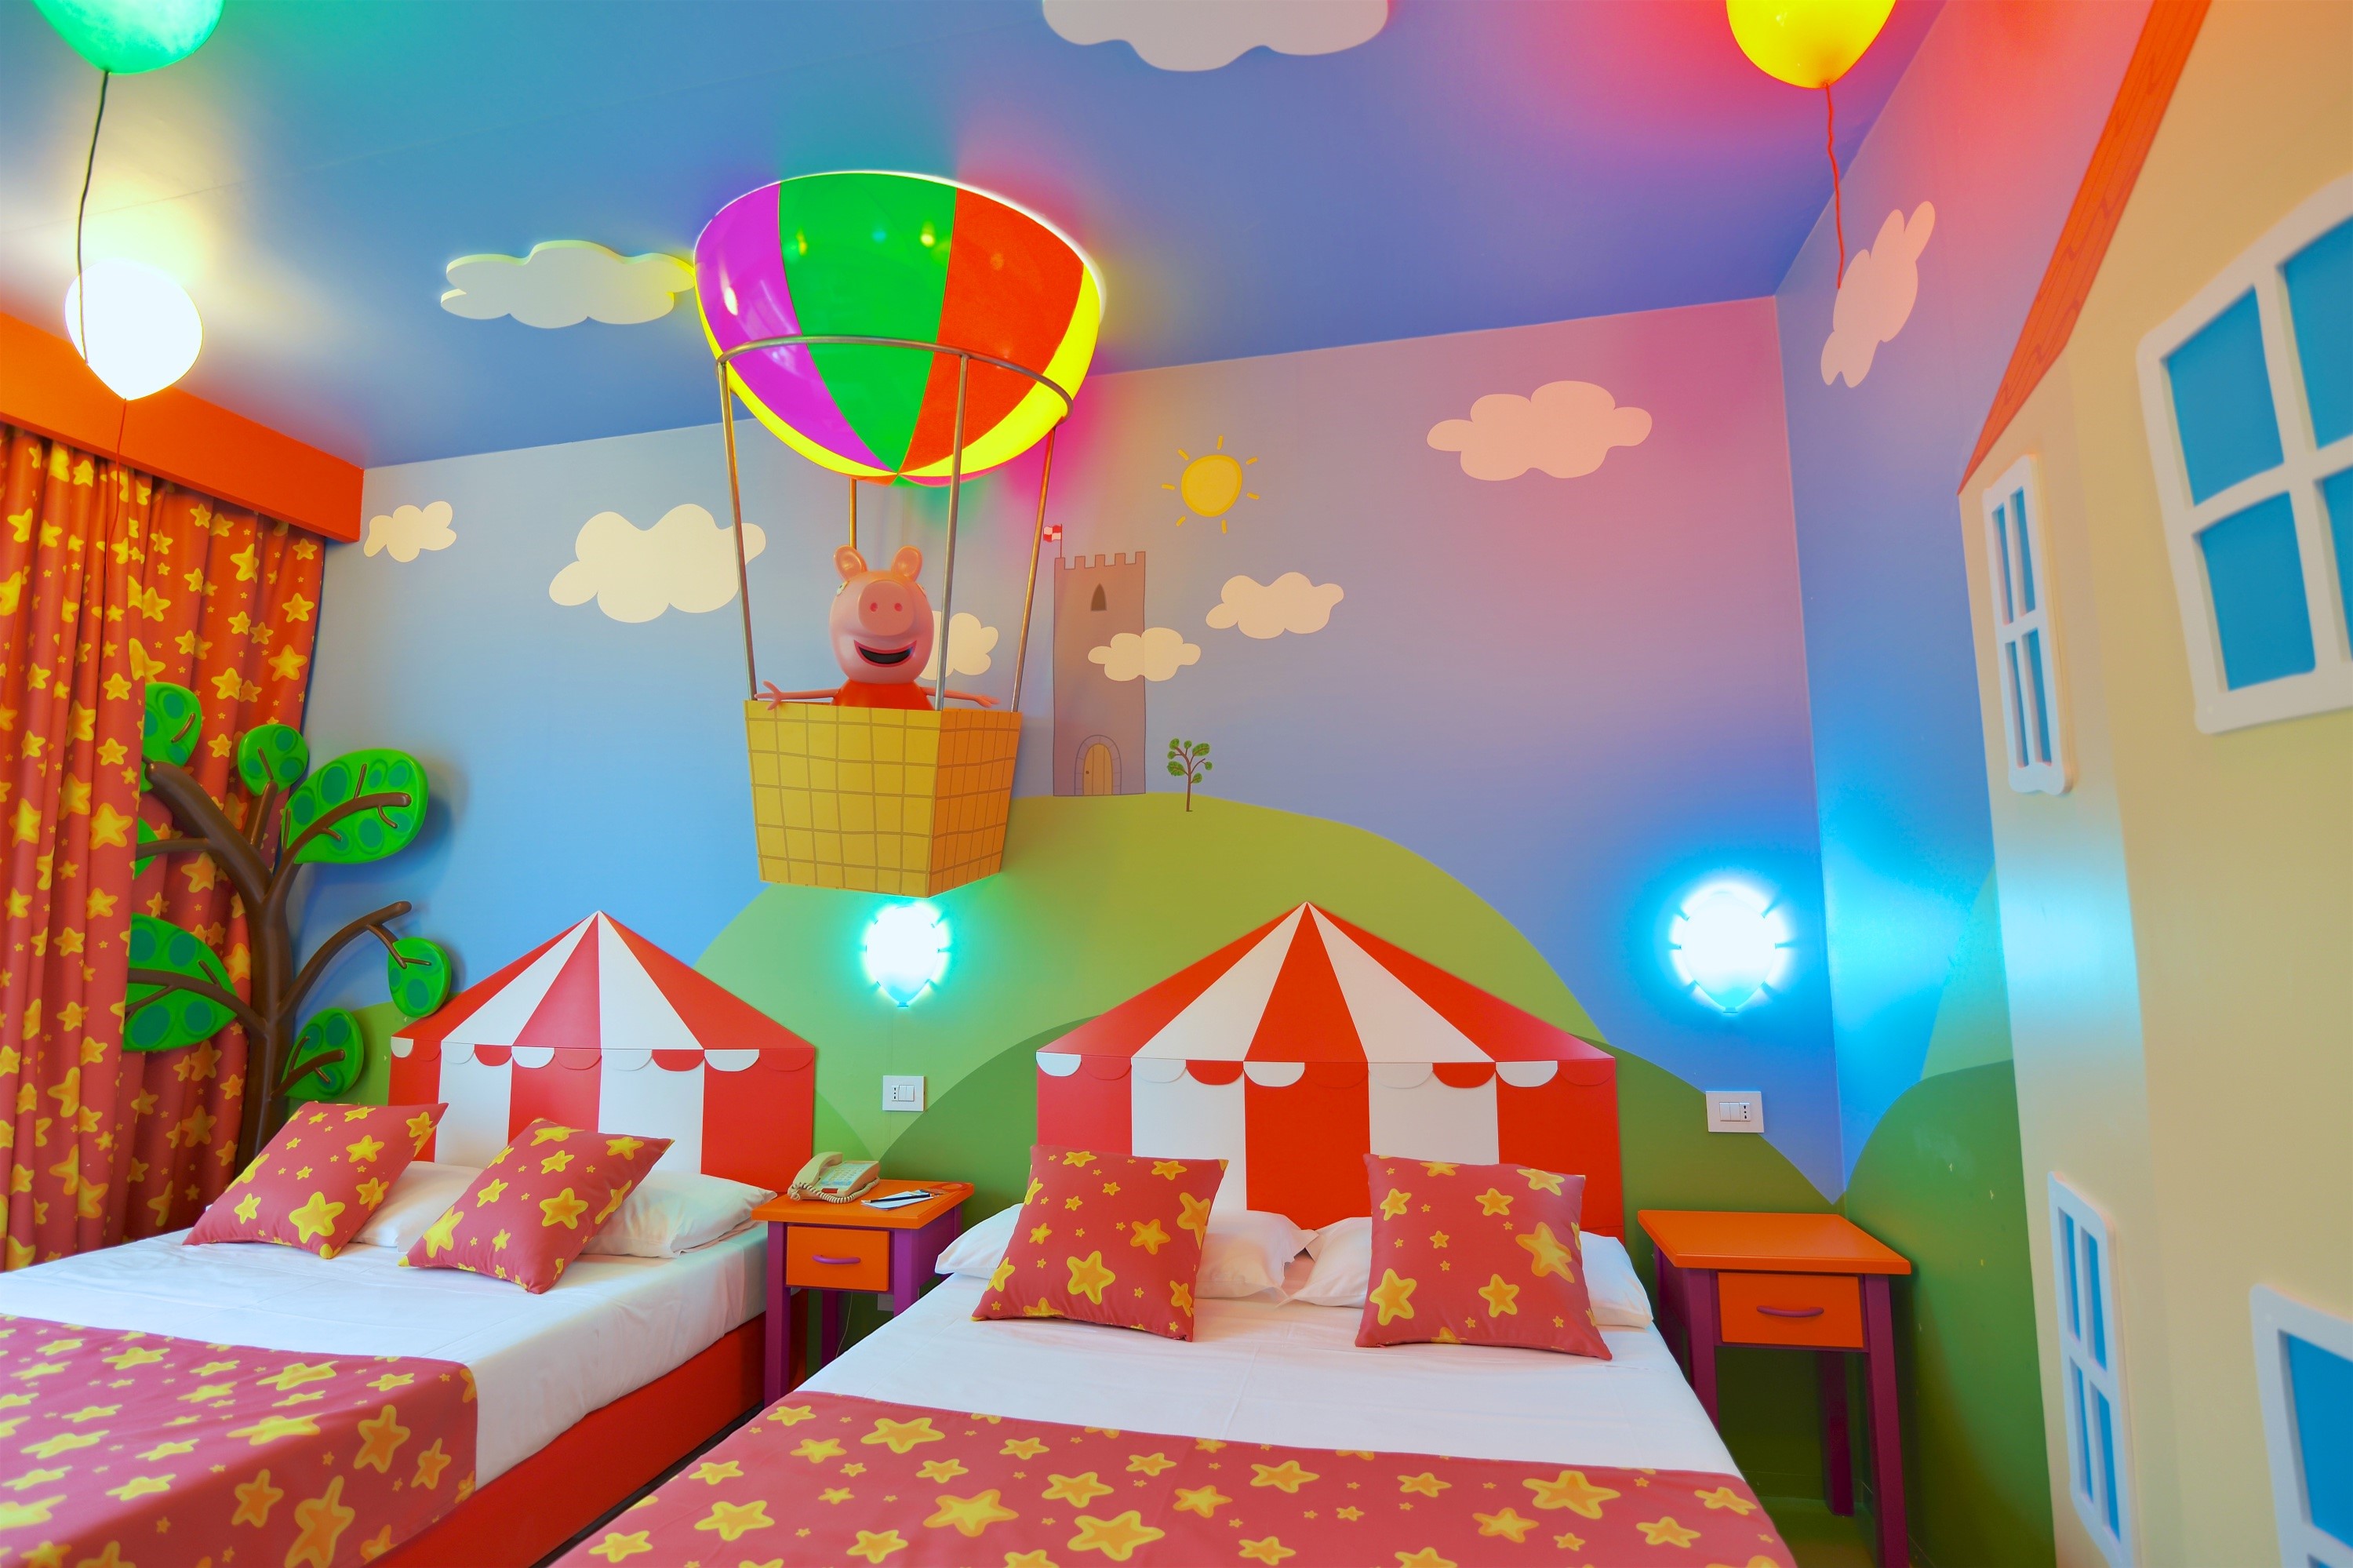 Gardaland Hotel - Peppa Pig Themed Room - Hot air balloon